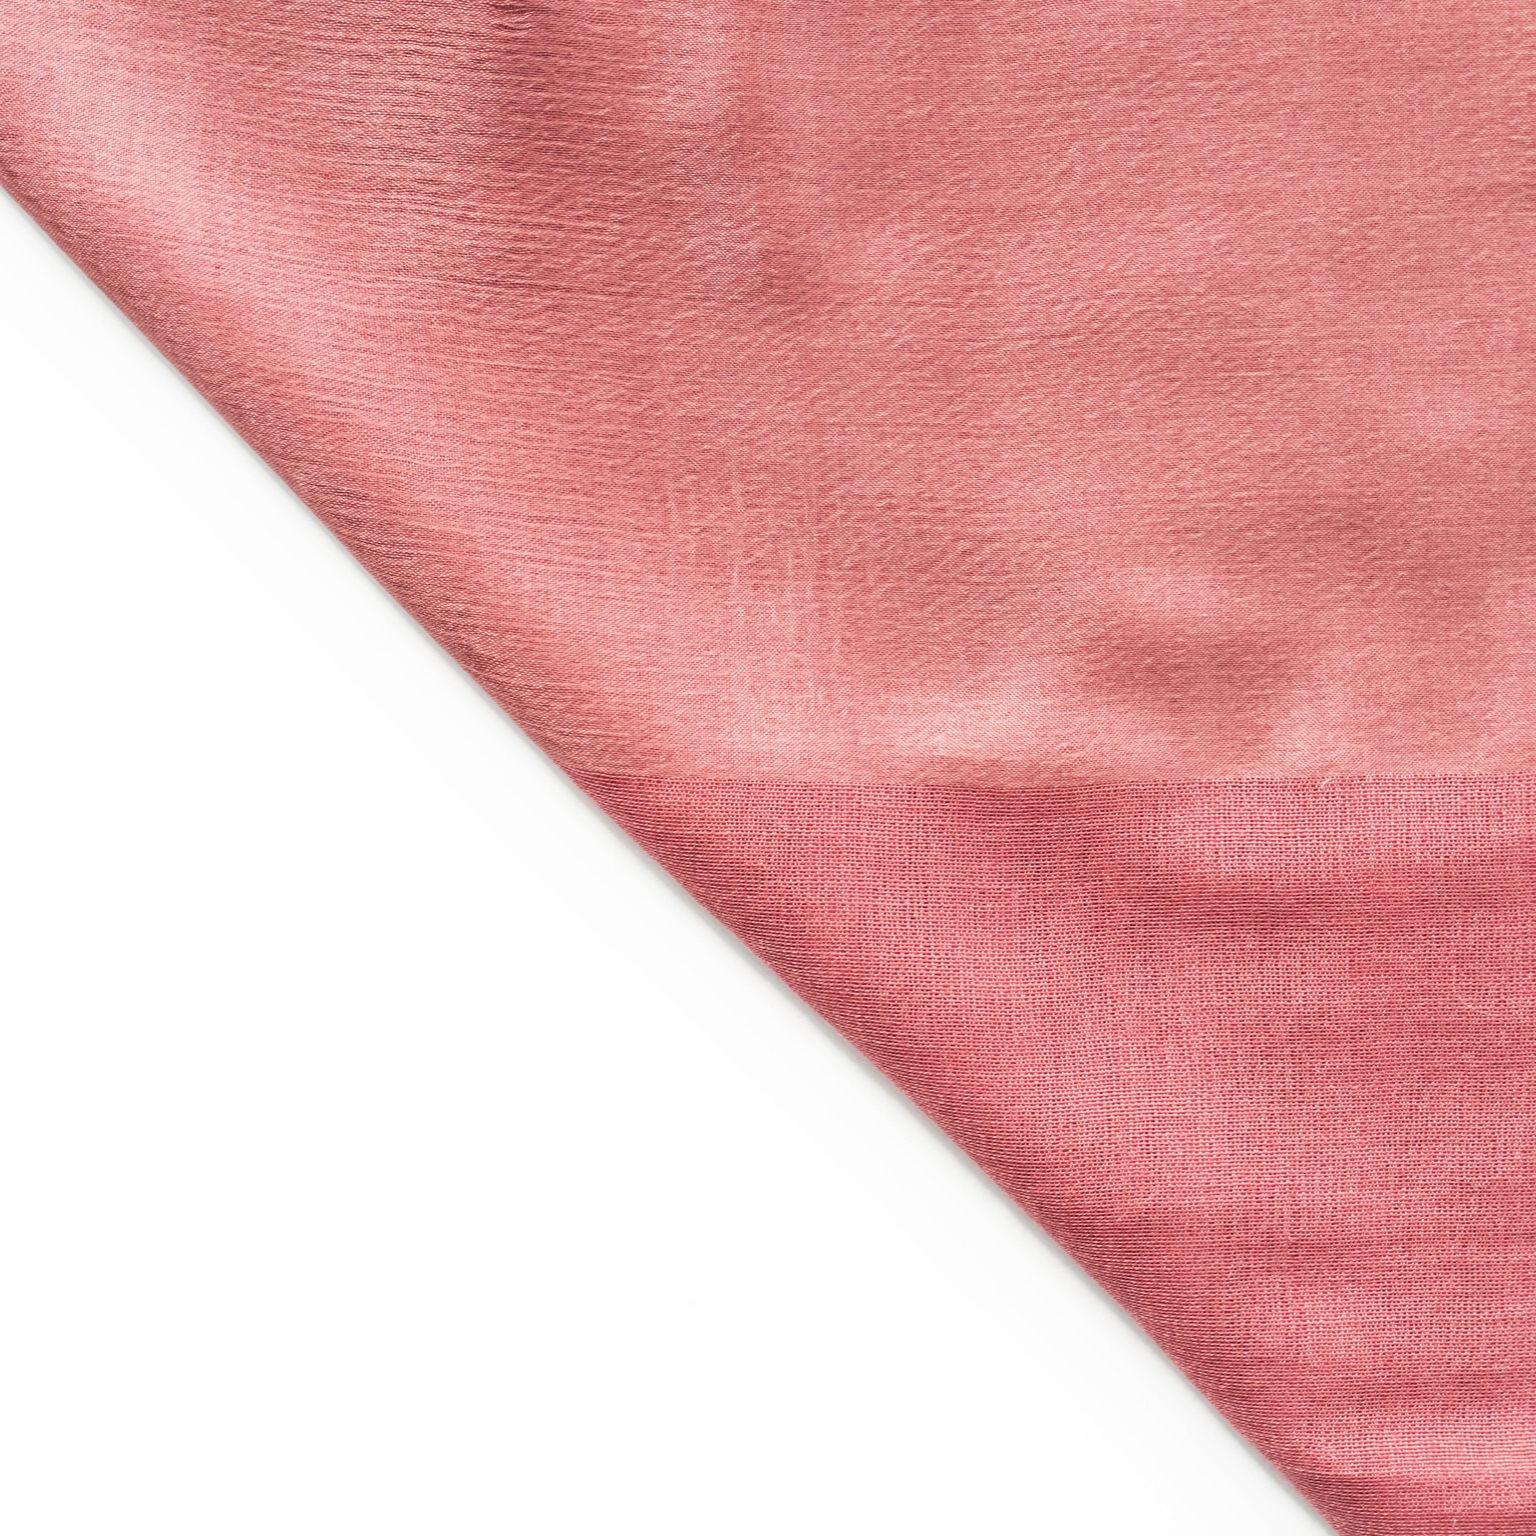 Hand-Woven Rose Handloom Cashmere Silk Scarf